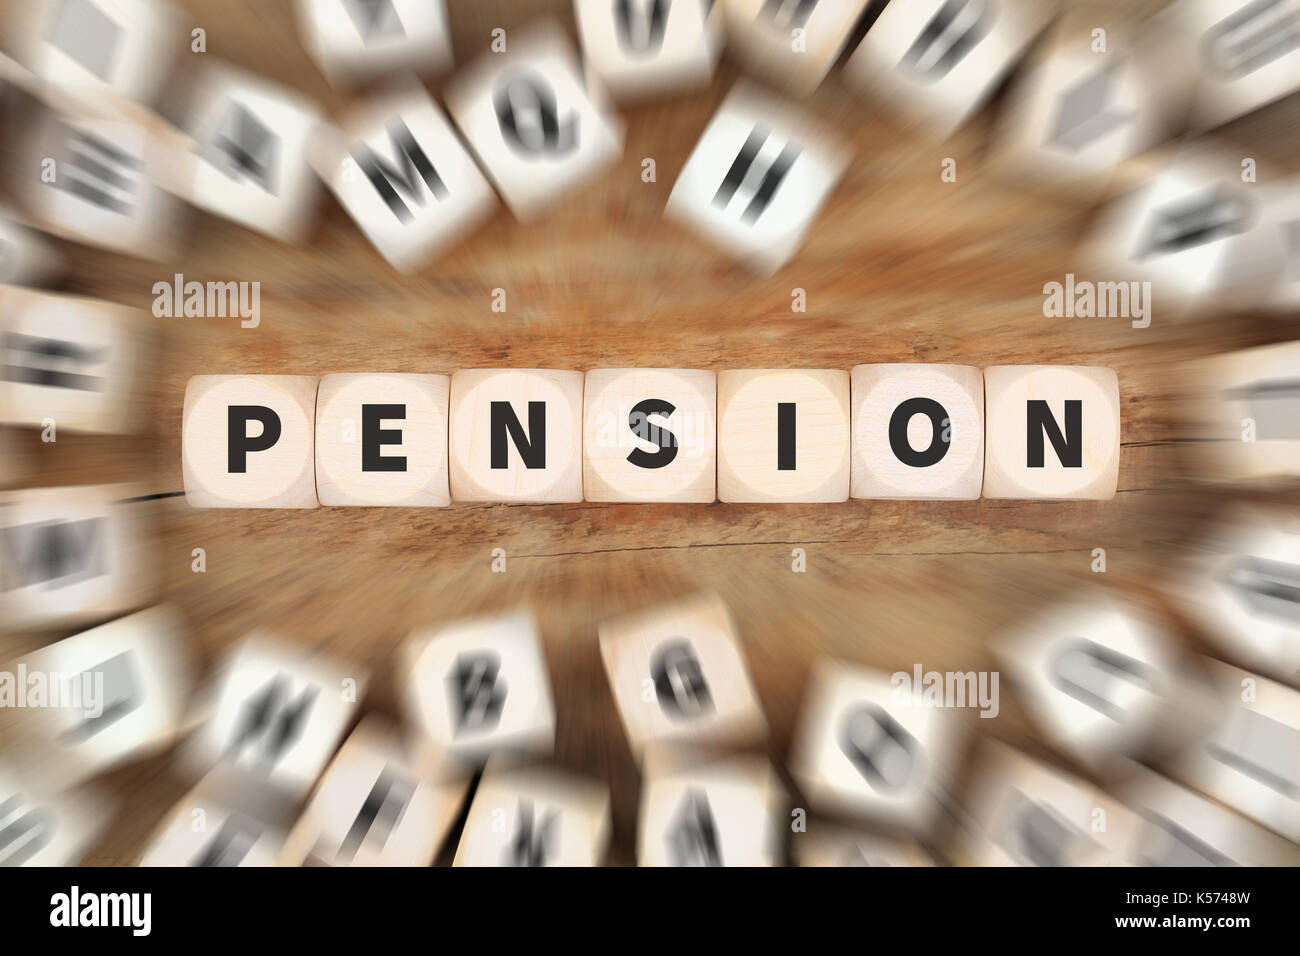 Pension retirement retire work working dice business concept idea Stock Photo